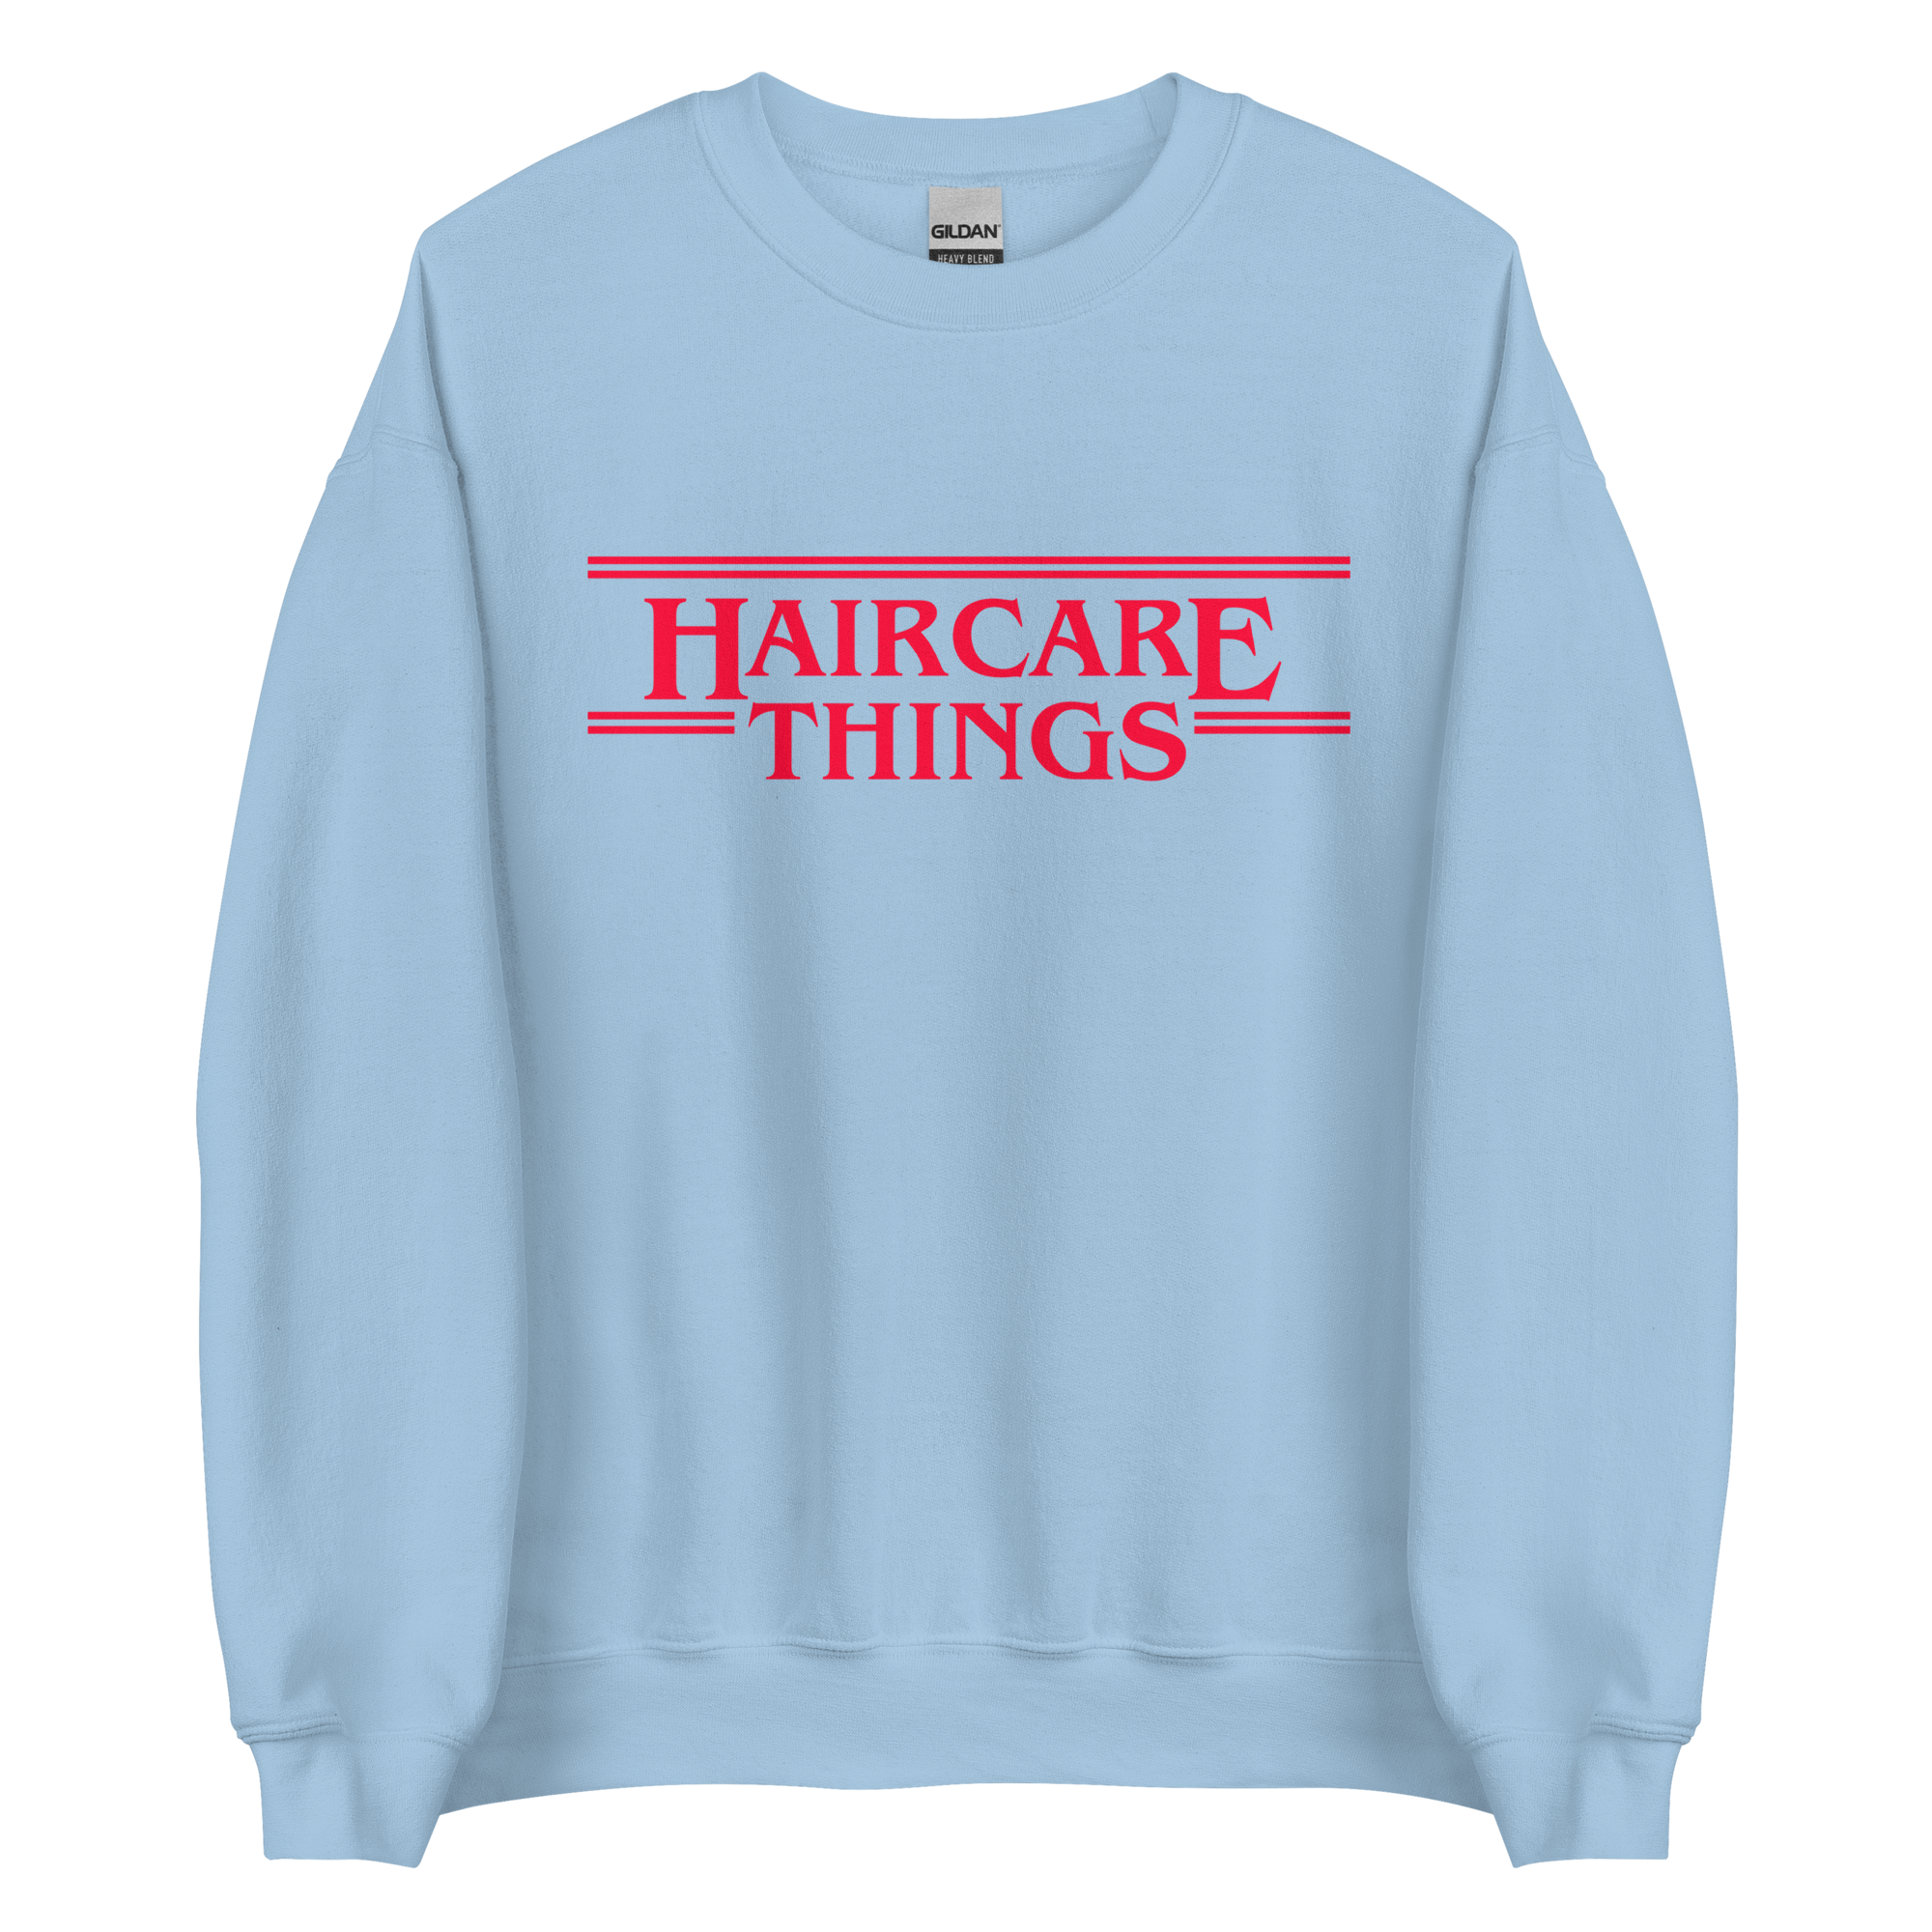 Haircare Things Unisex Crewneck Sweatshirt